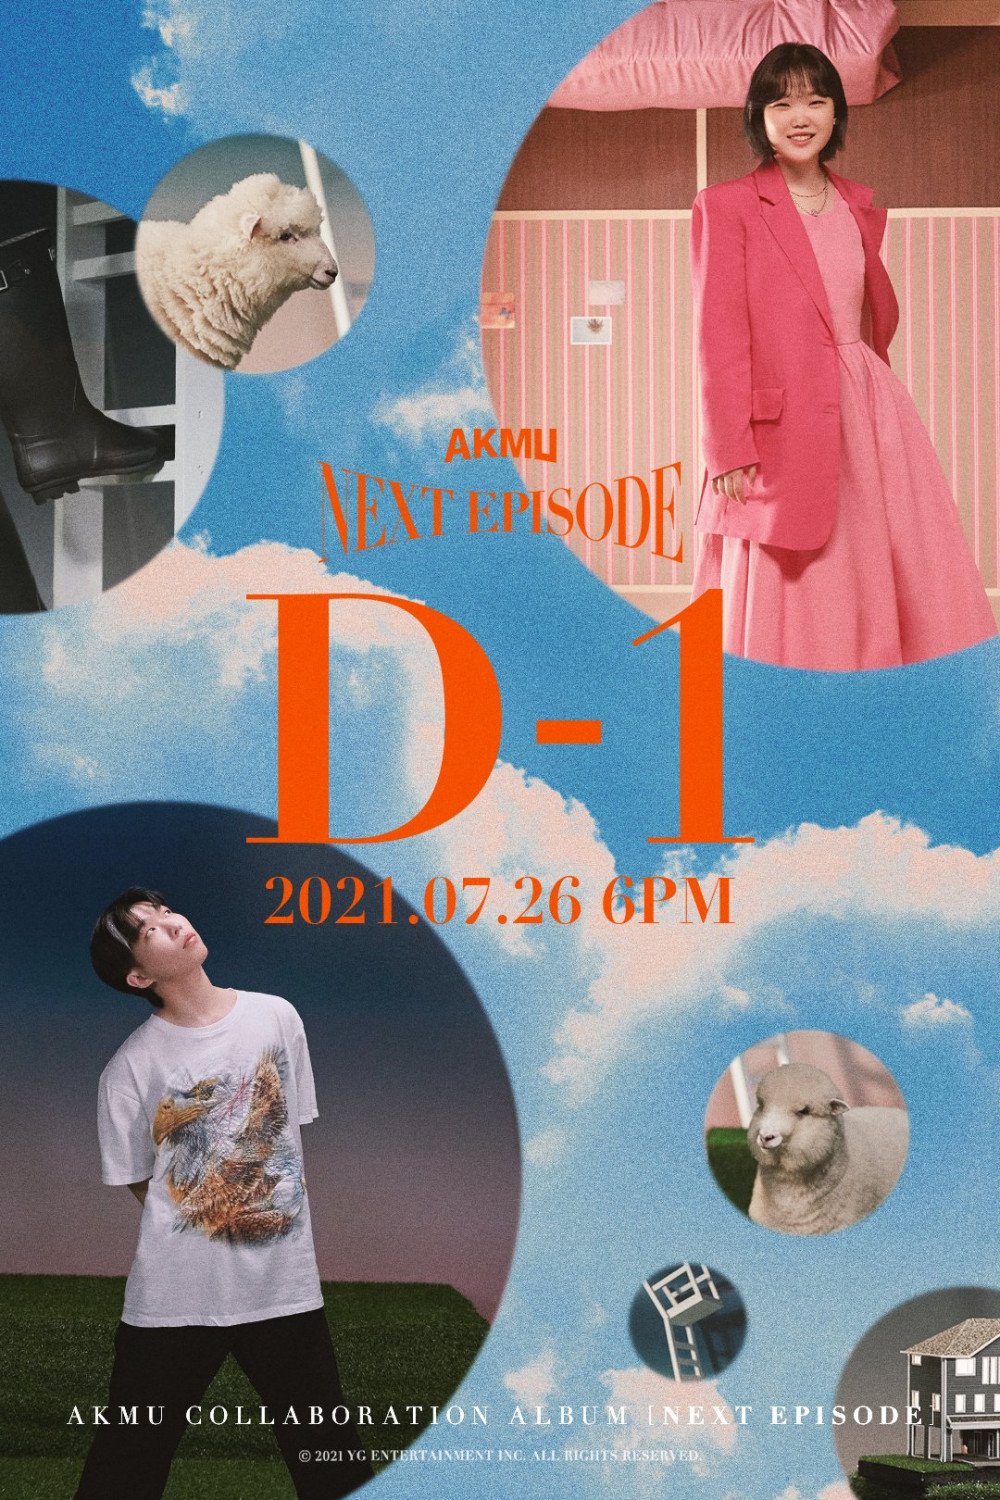 [Камбэк] AKMU альбом "Next Episode": постер D-Day + MV "NAKKA" feat. IU